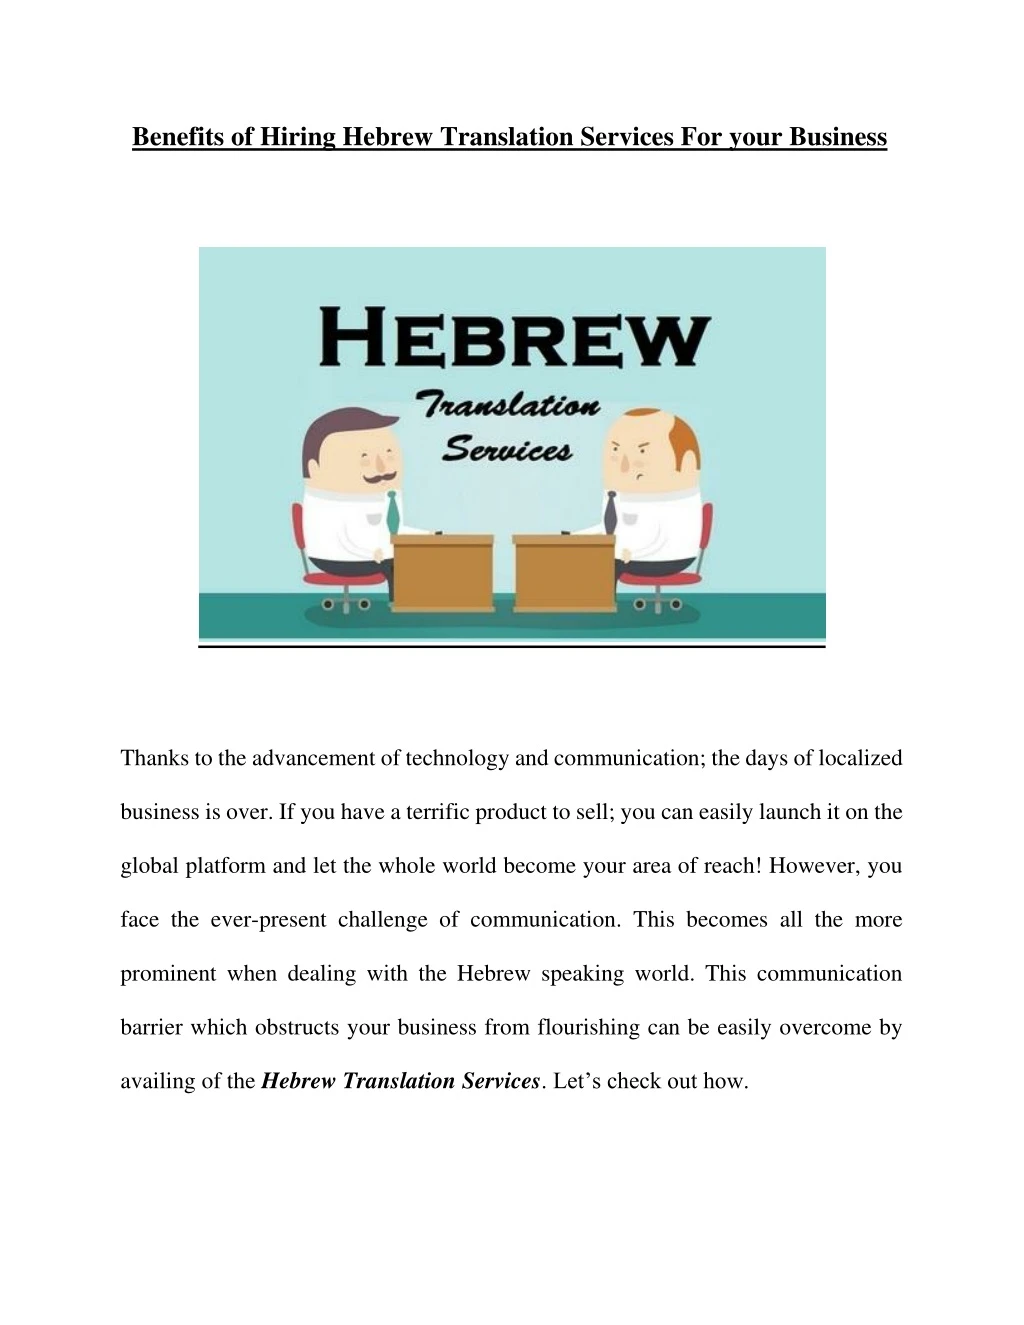 benefits of hiring hebrew translation services